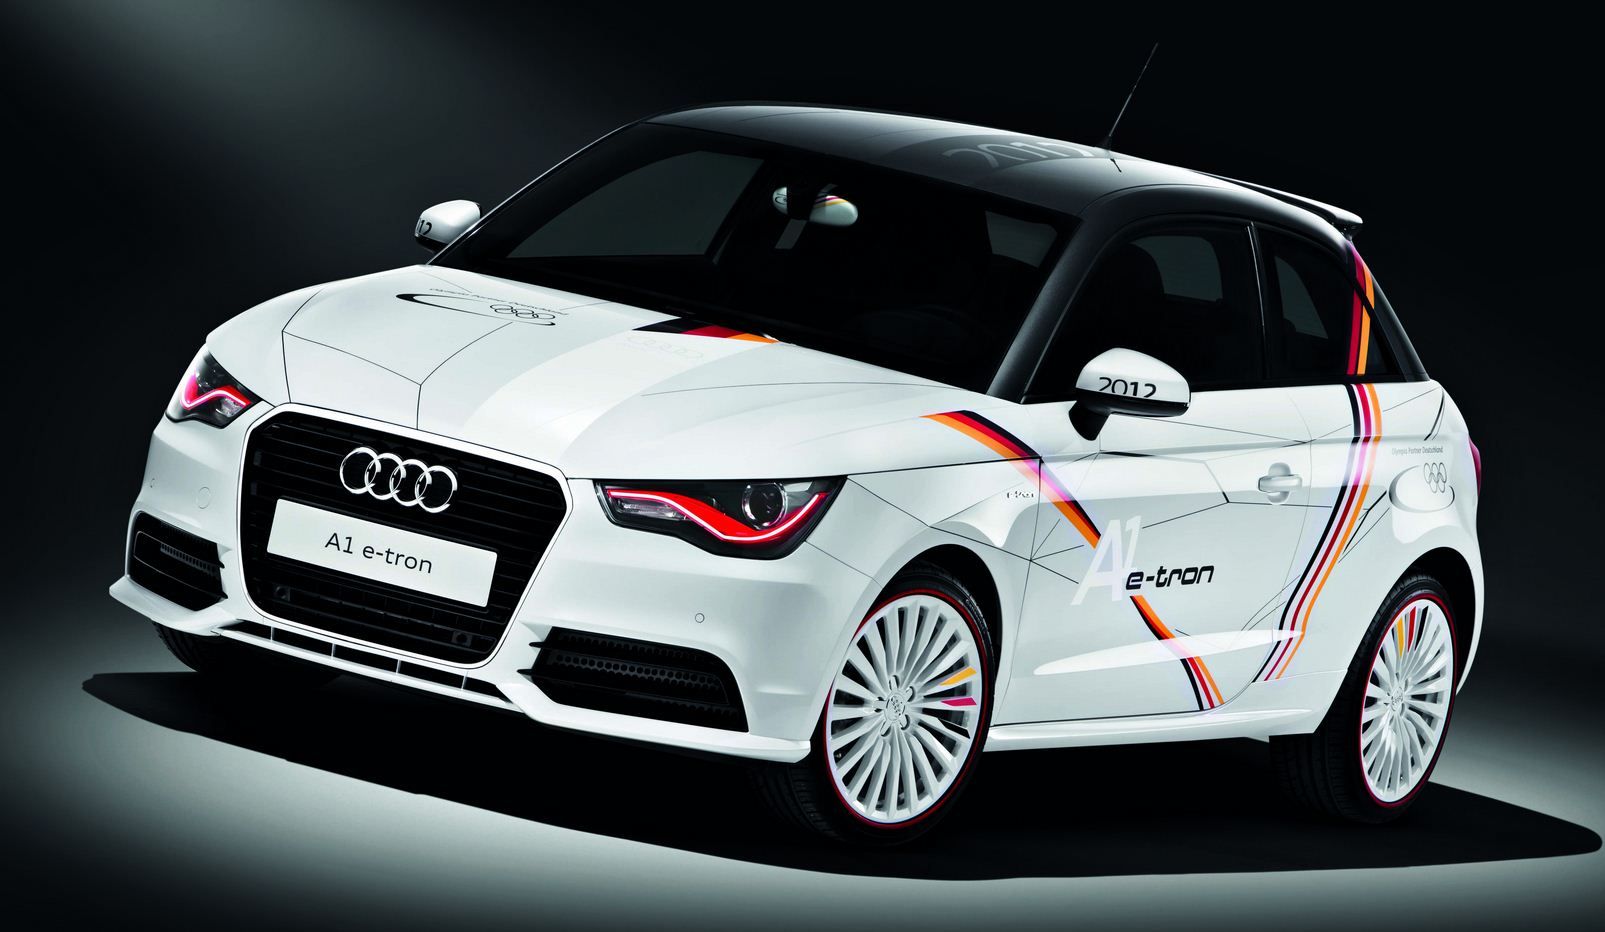 2012 Audi A1 E-tron German Olympic Team Edition